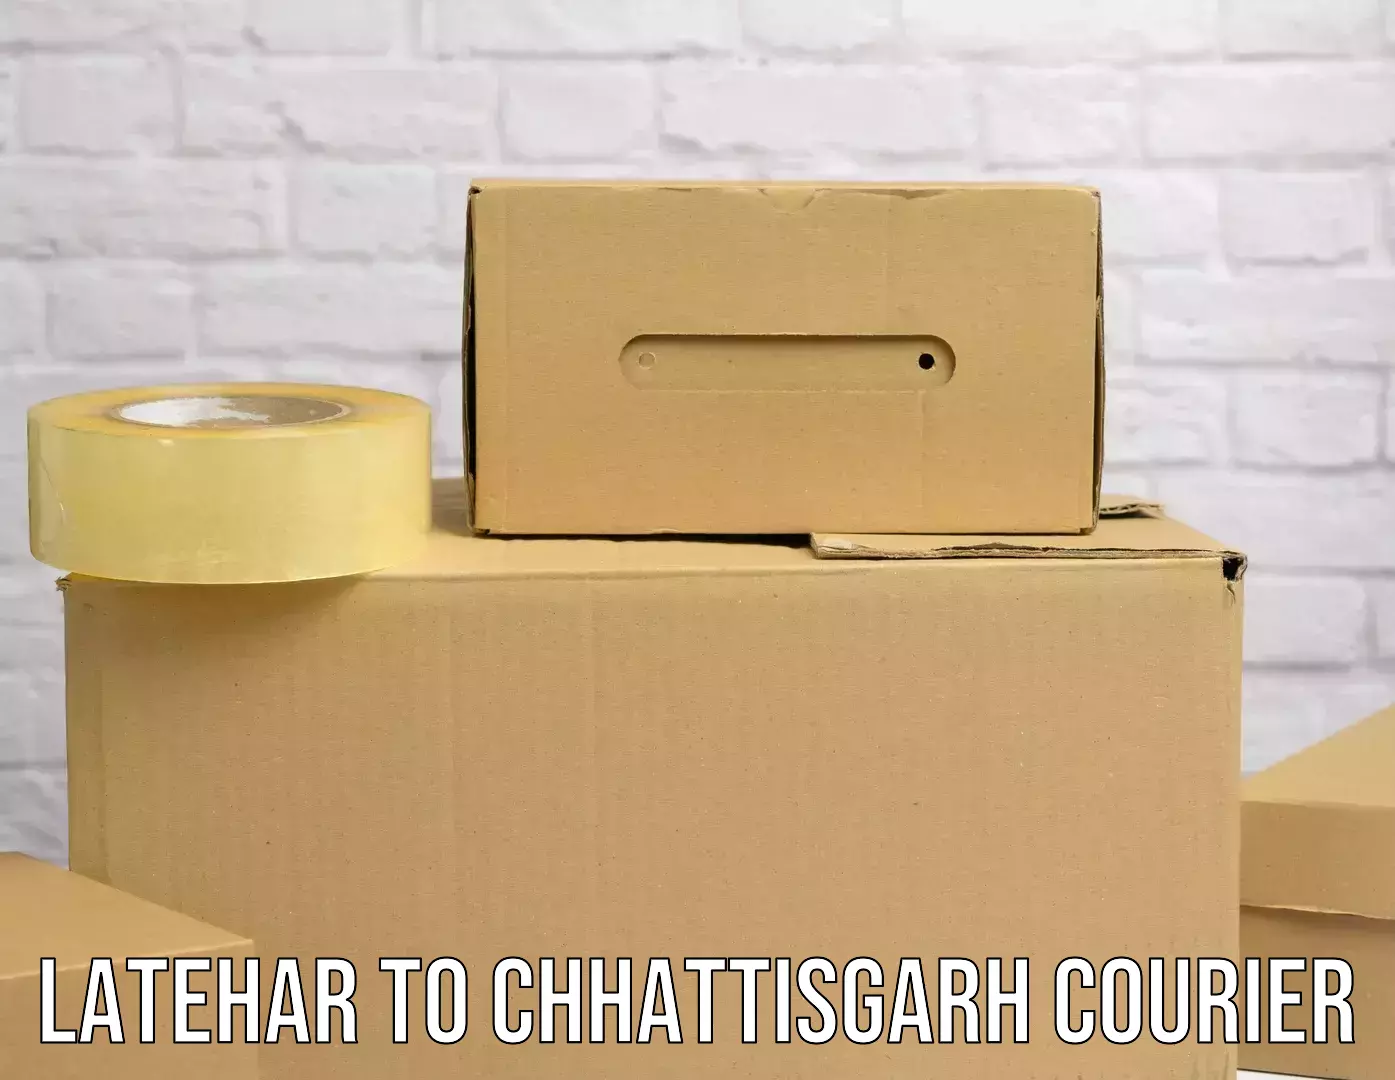 Supply chain delivery Latehar to Patna Chhattisgarh